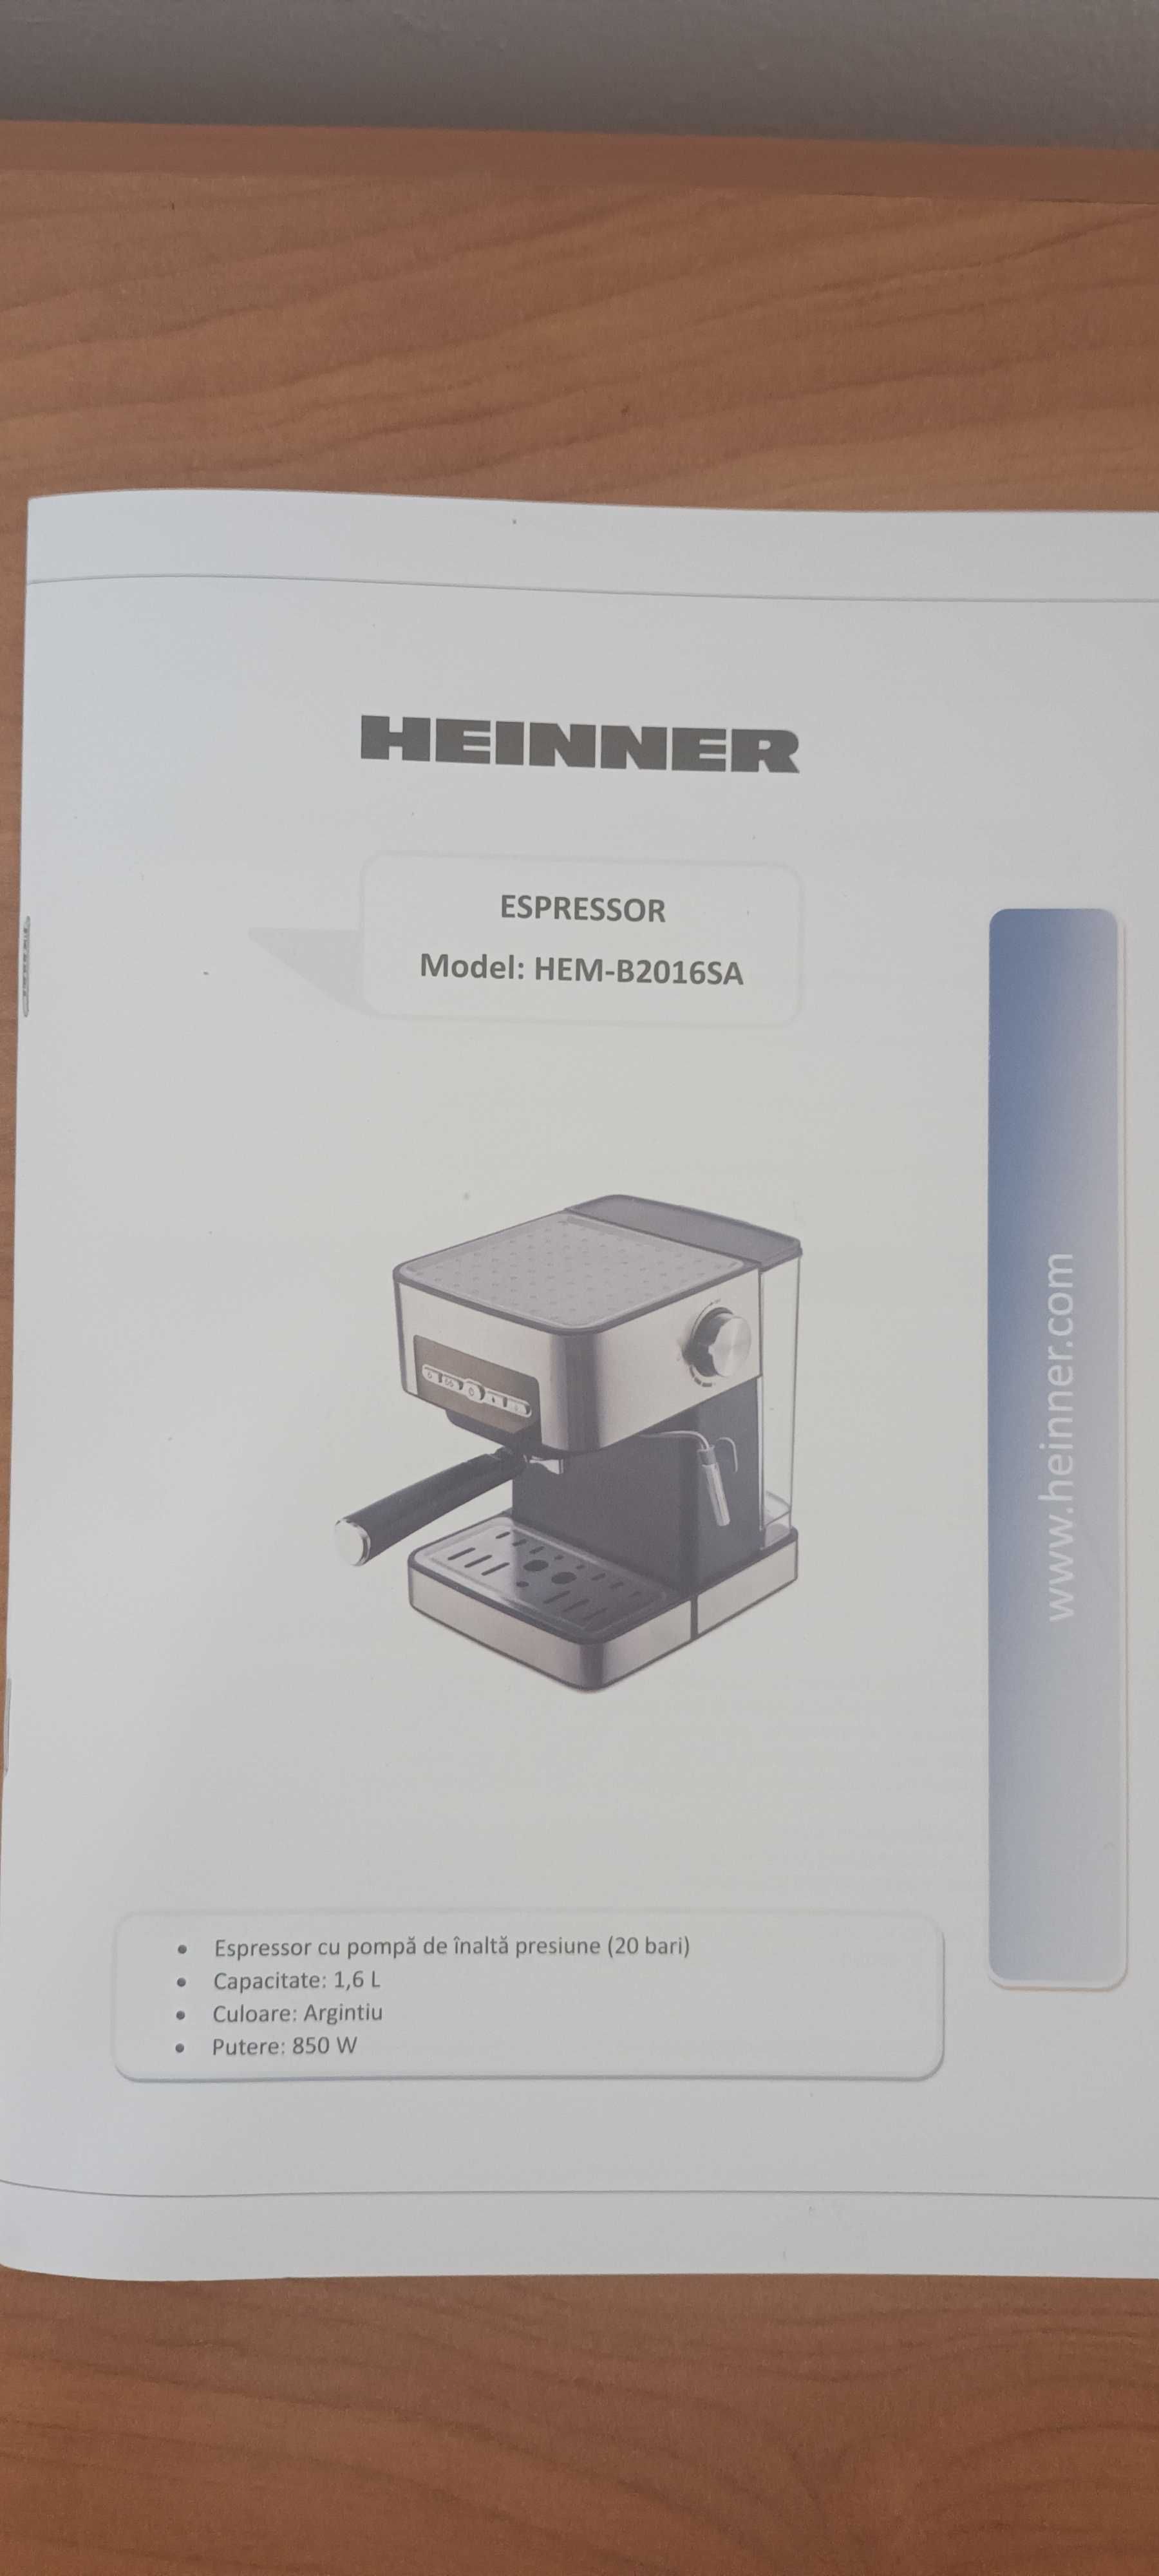 Vand espressor Heinner in garanție